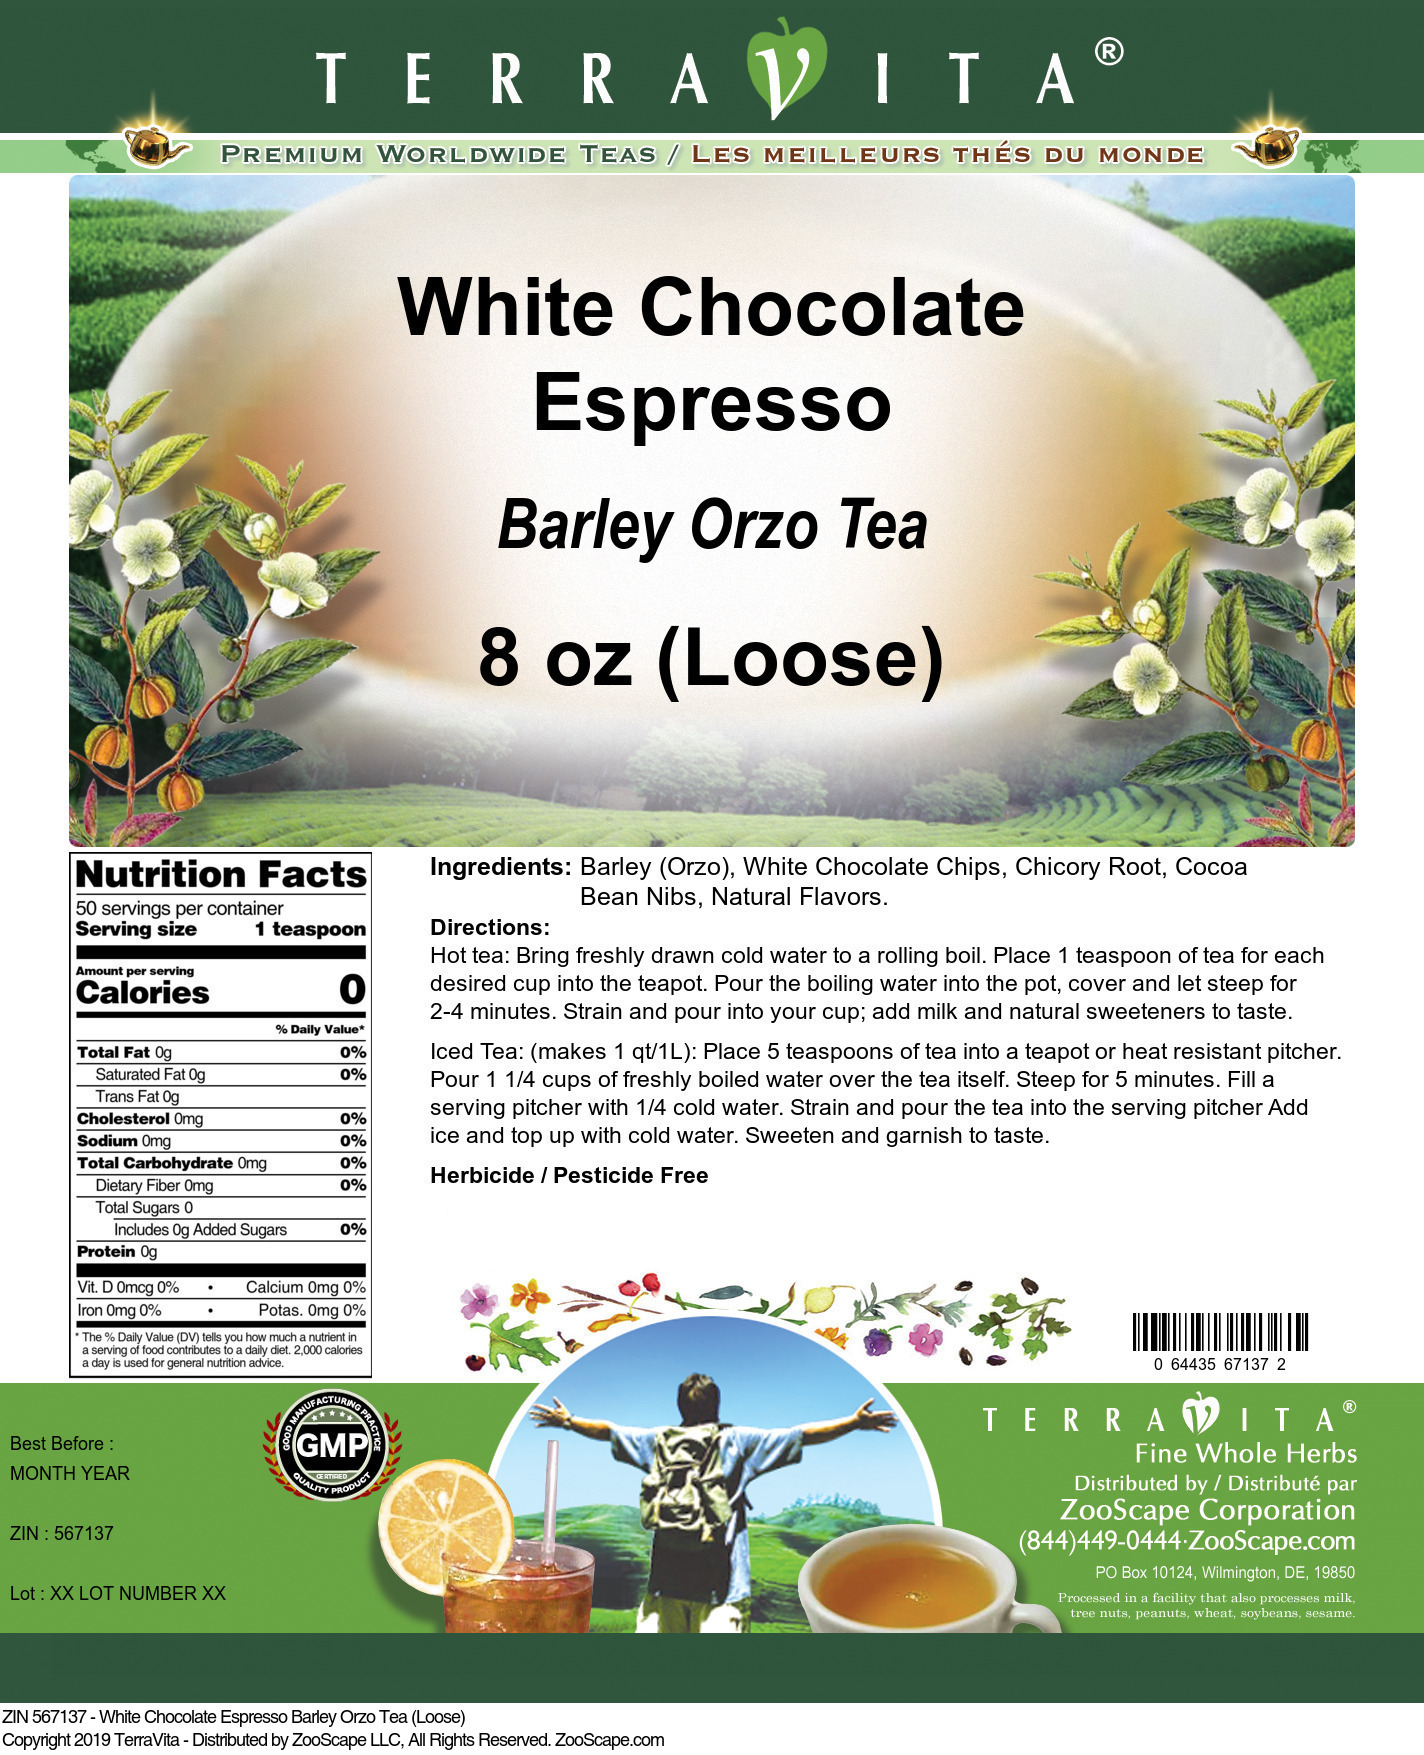 White Chocolate Espresso Barley Orzo Tea (Loose) - Label